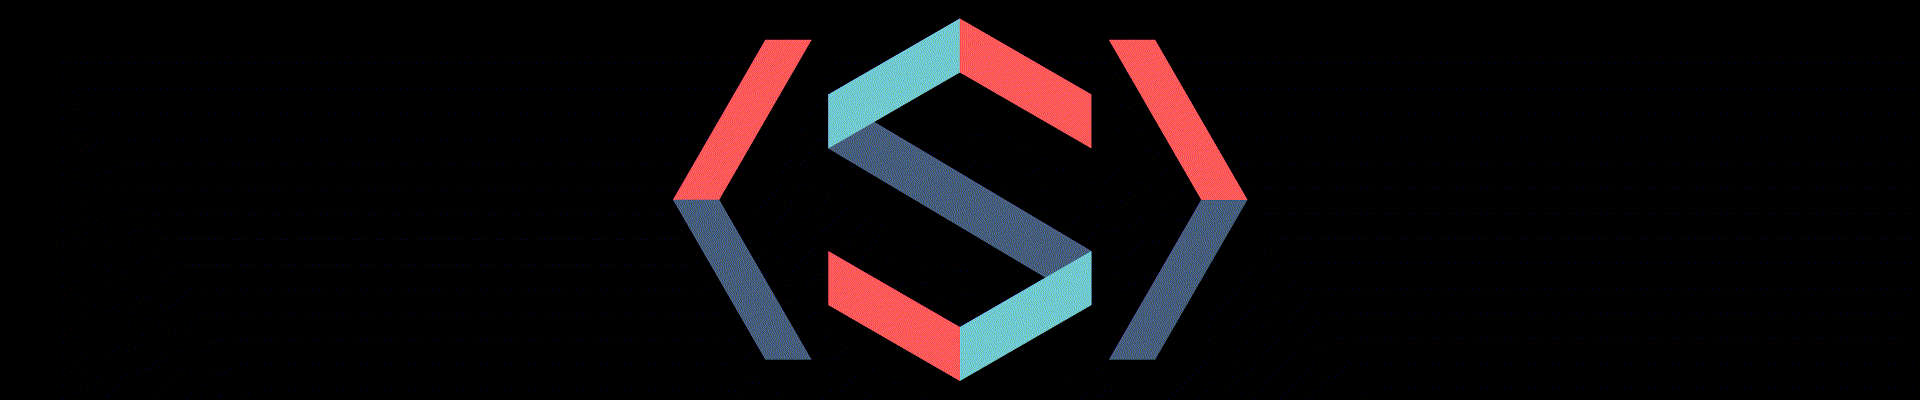 synHacks Logo Mockup